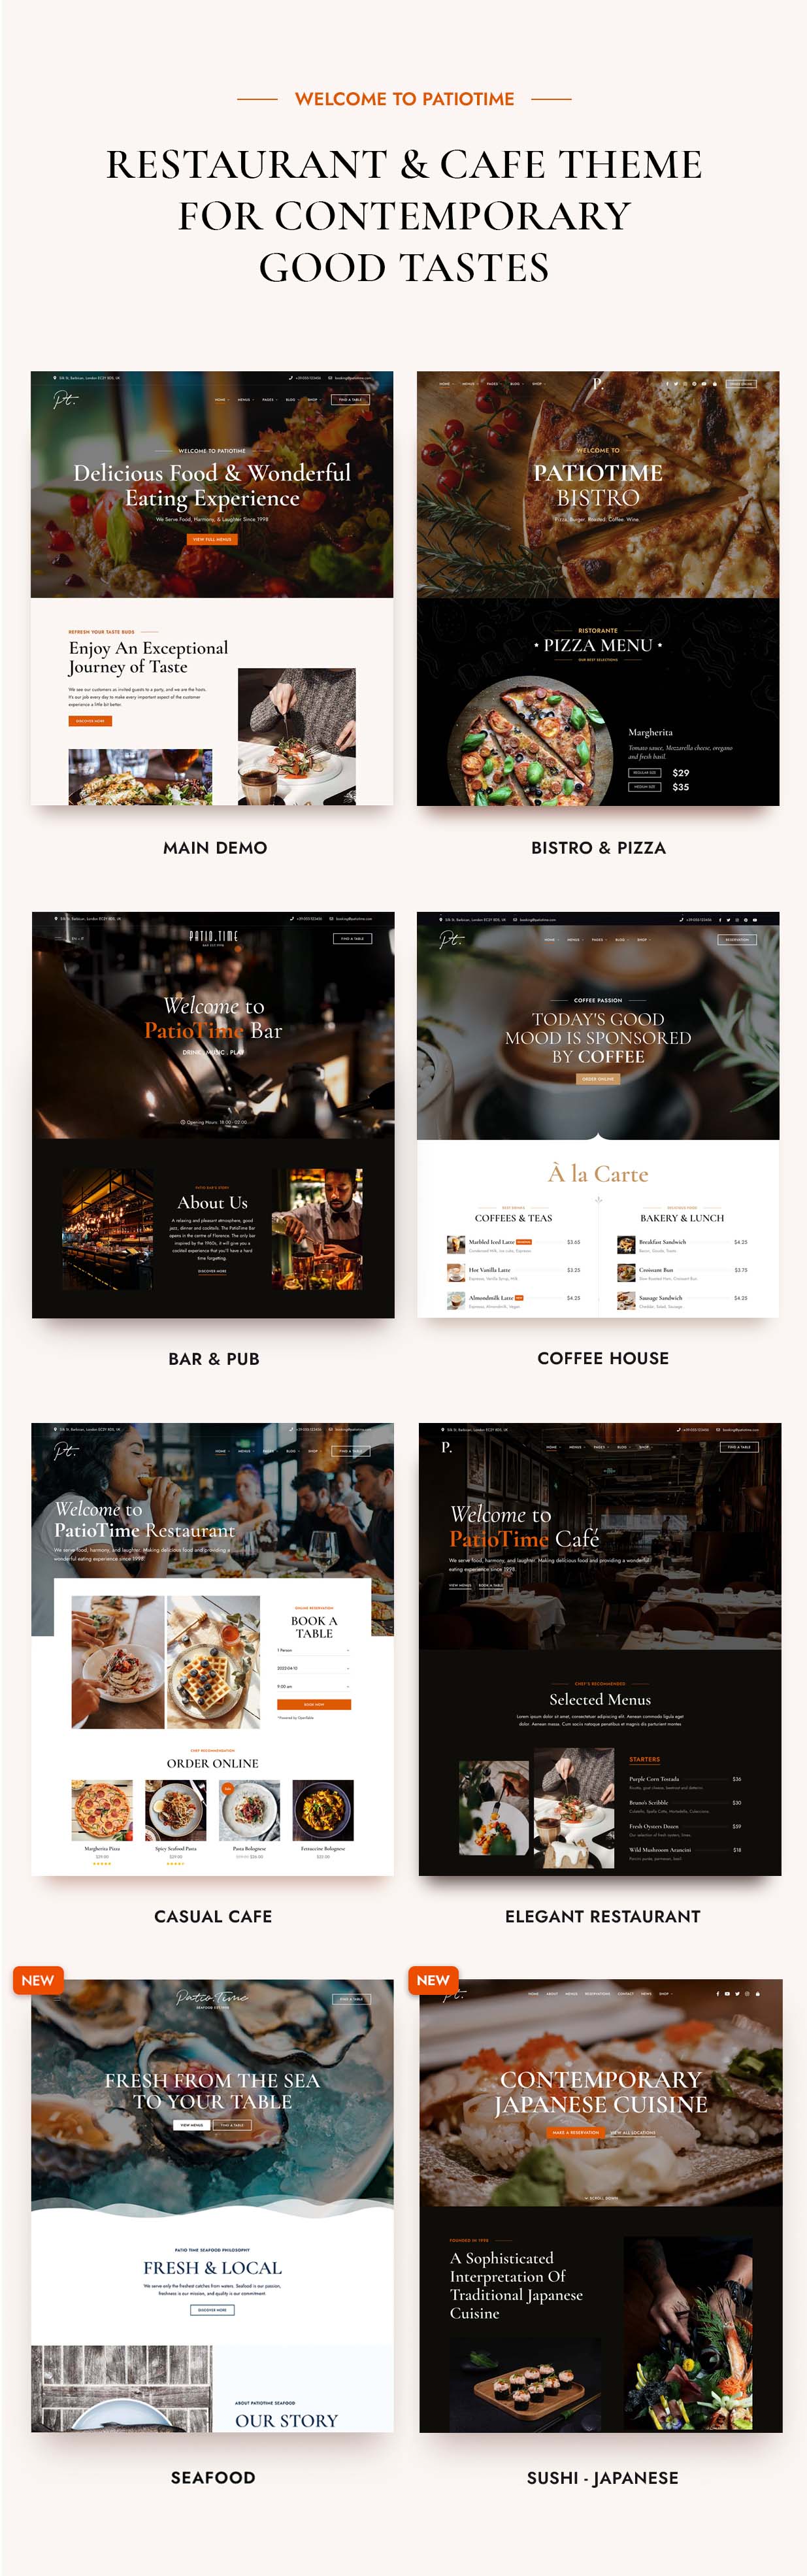 PatioTime - Restaurant-WordPress-Theme.